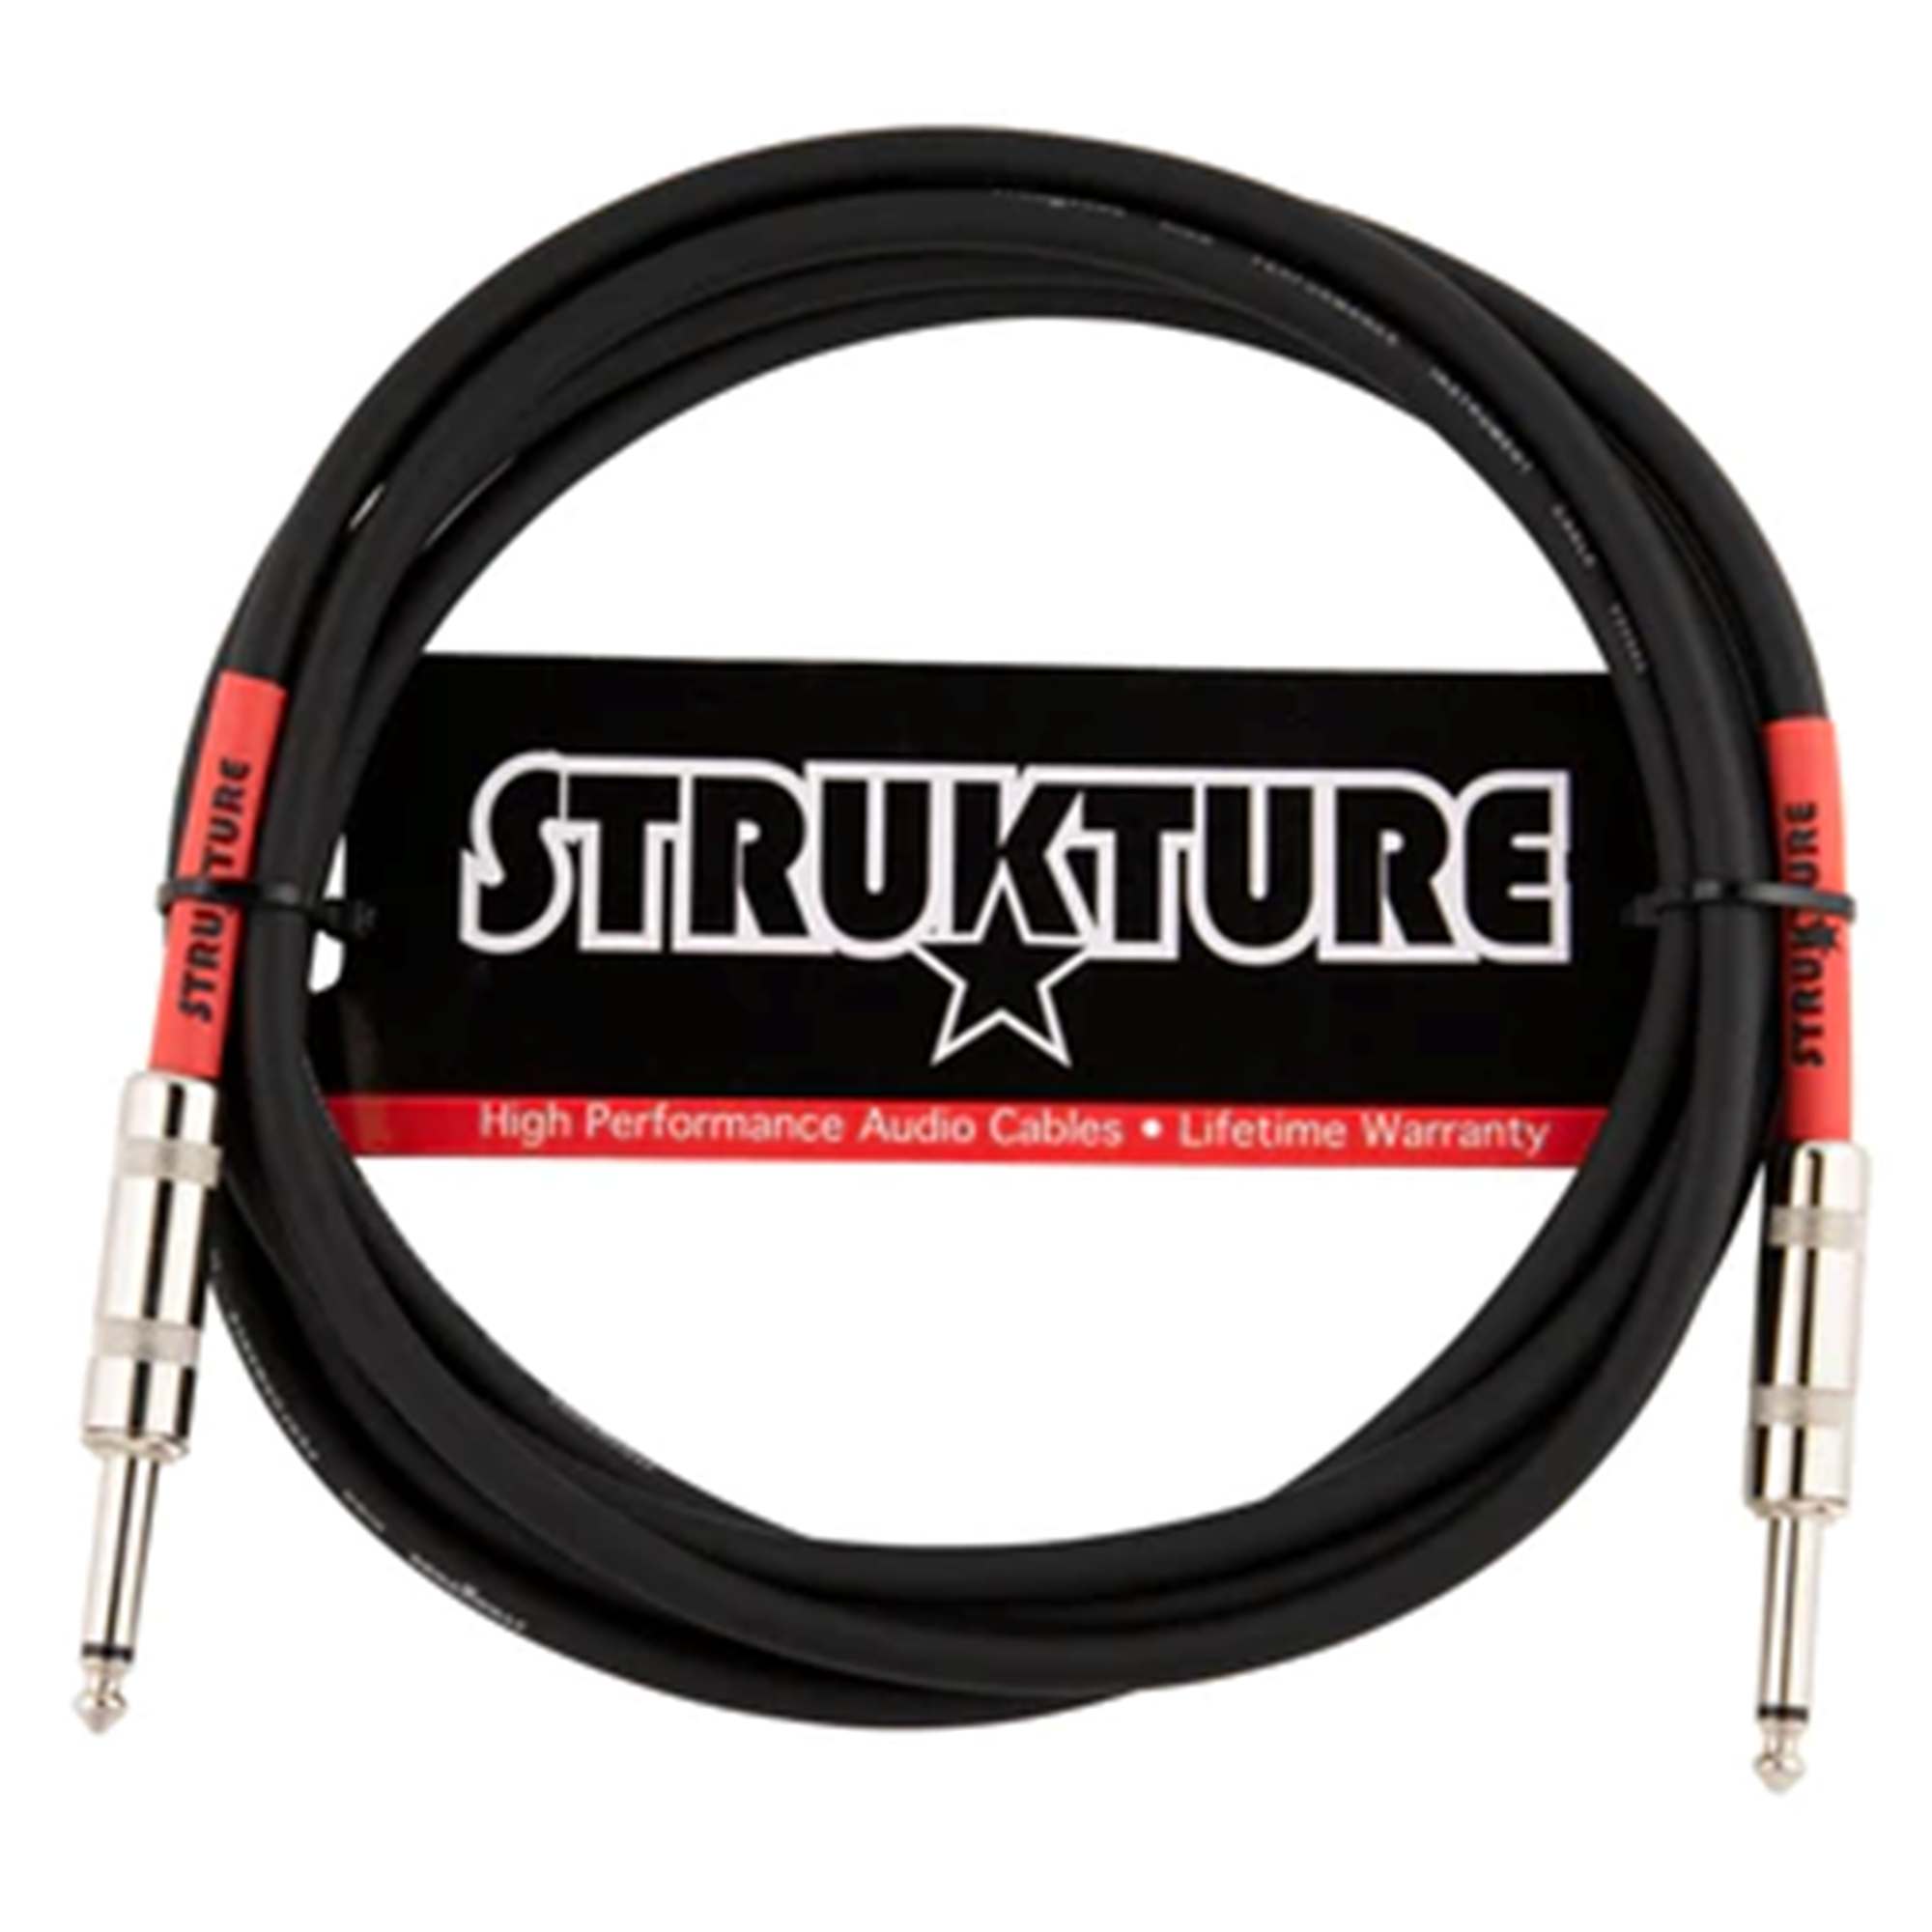 STRUKTURE PRO107G 10' 7mm Instrument Cable